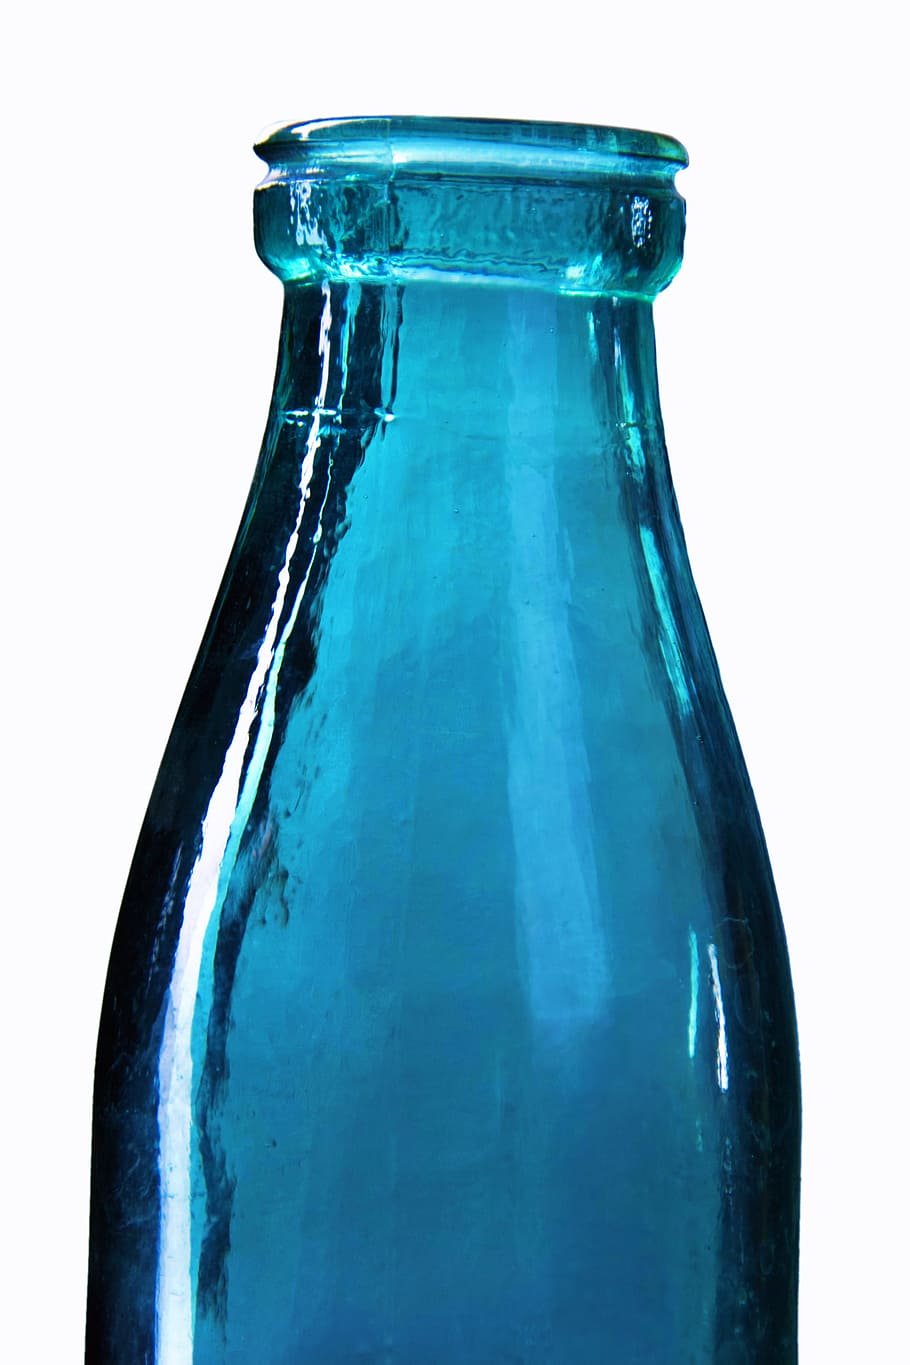 glass, blue, soda, closeup, isolated, wet, bottleneck, clear